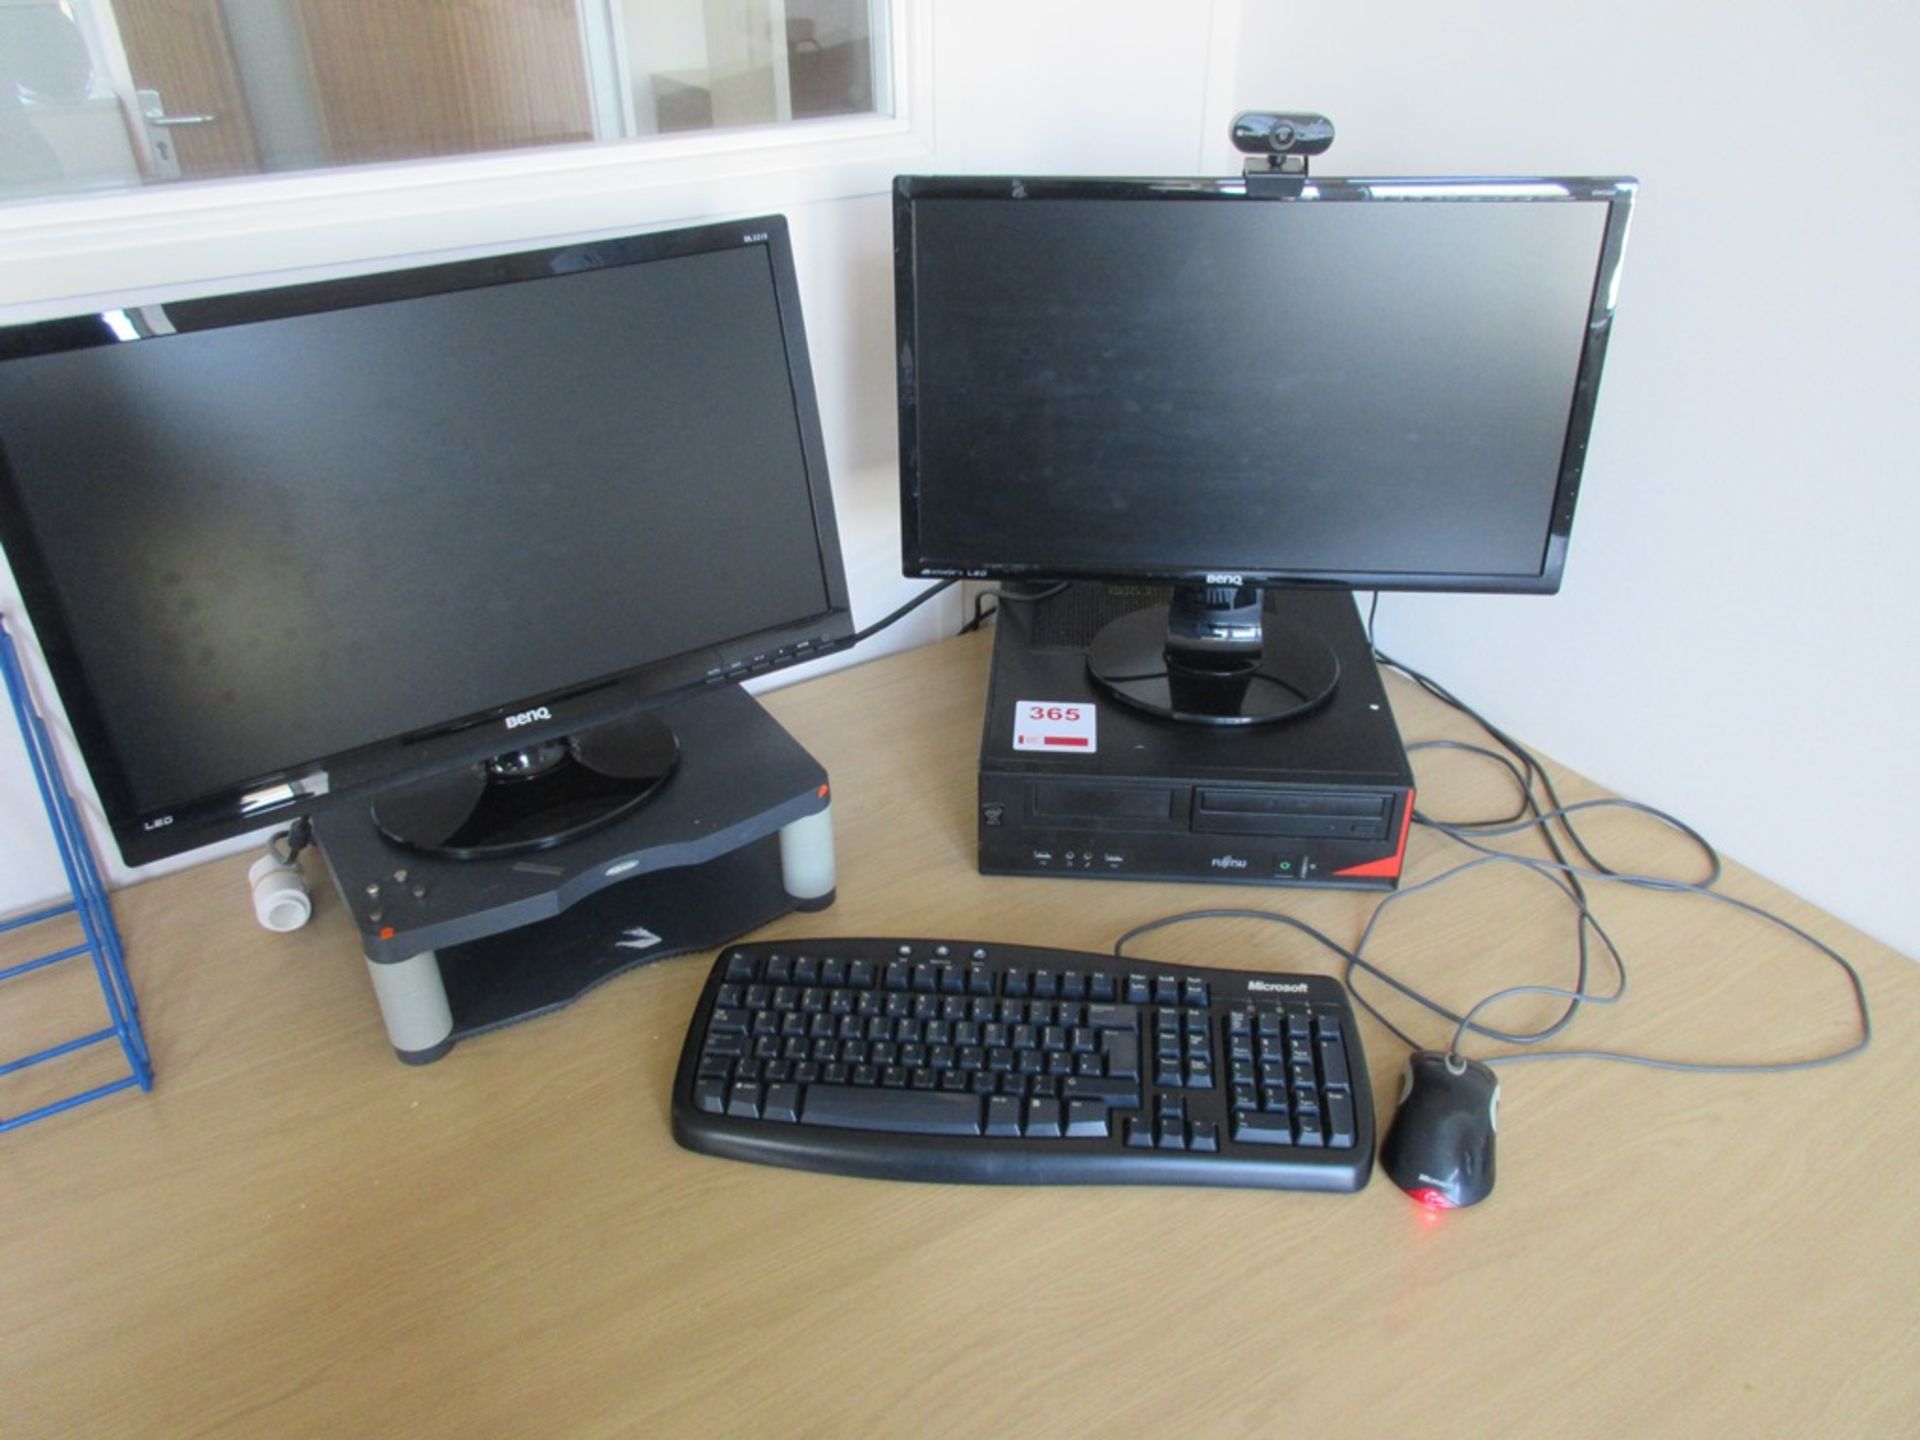 Fujitsu Core i5 computer system, with 2 x Benq flatscreen monitors, keyboard, mouse